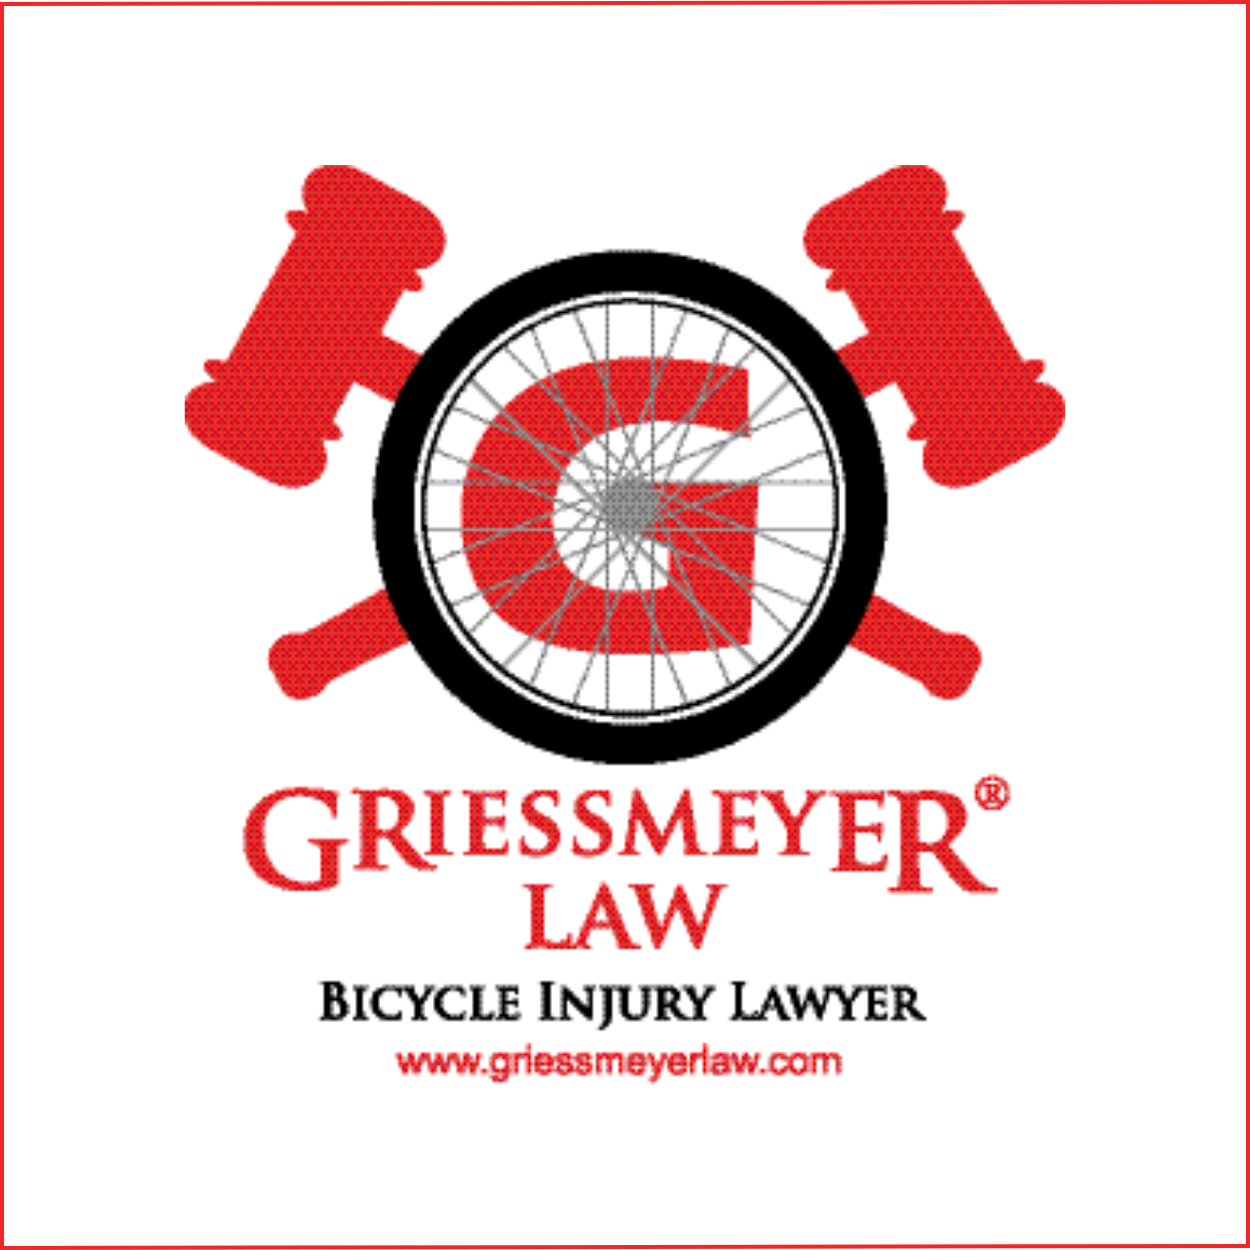 Griessmeyer Law